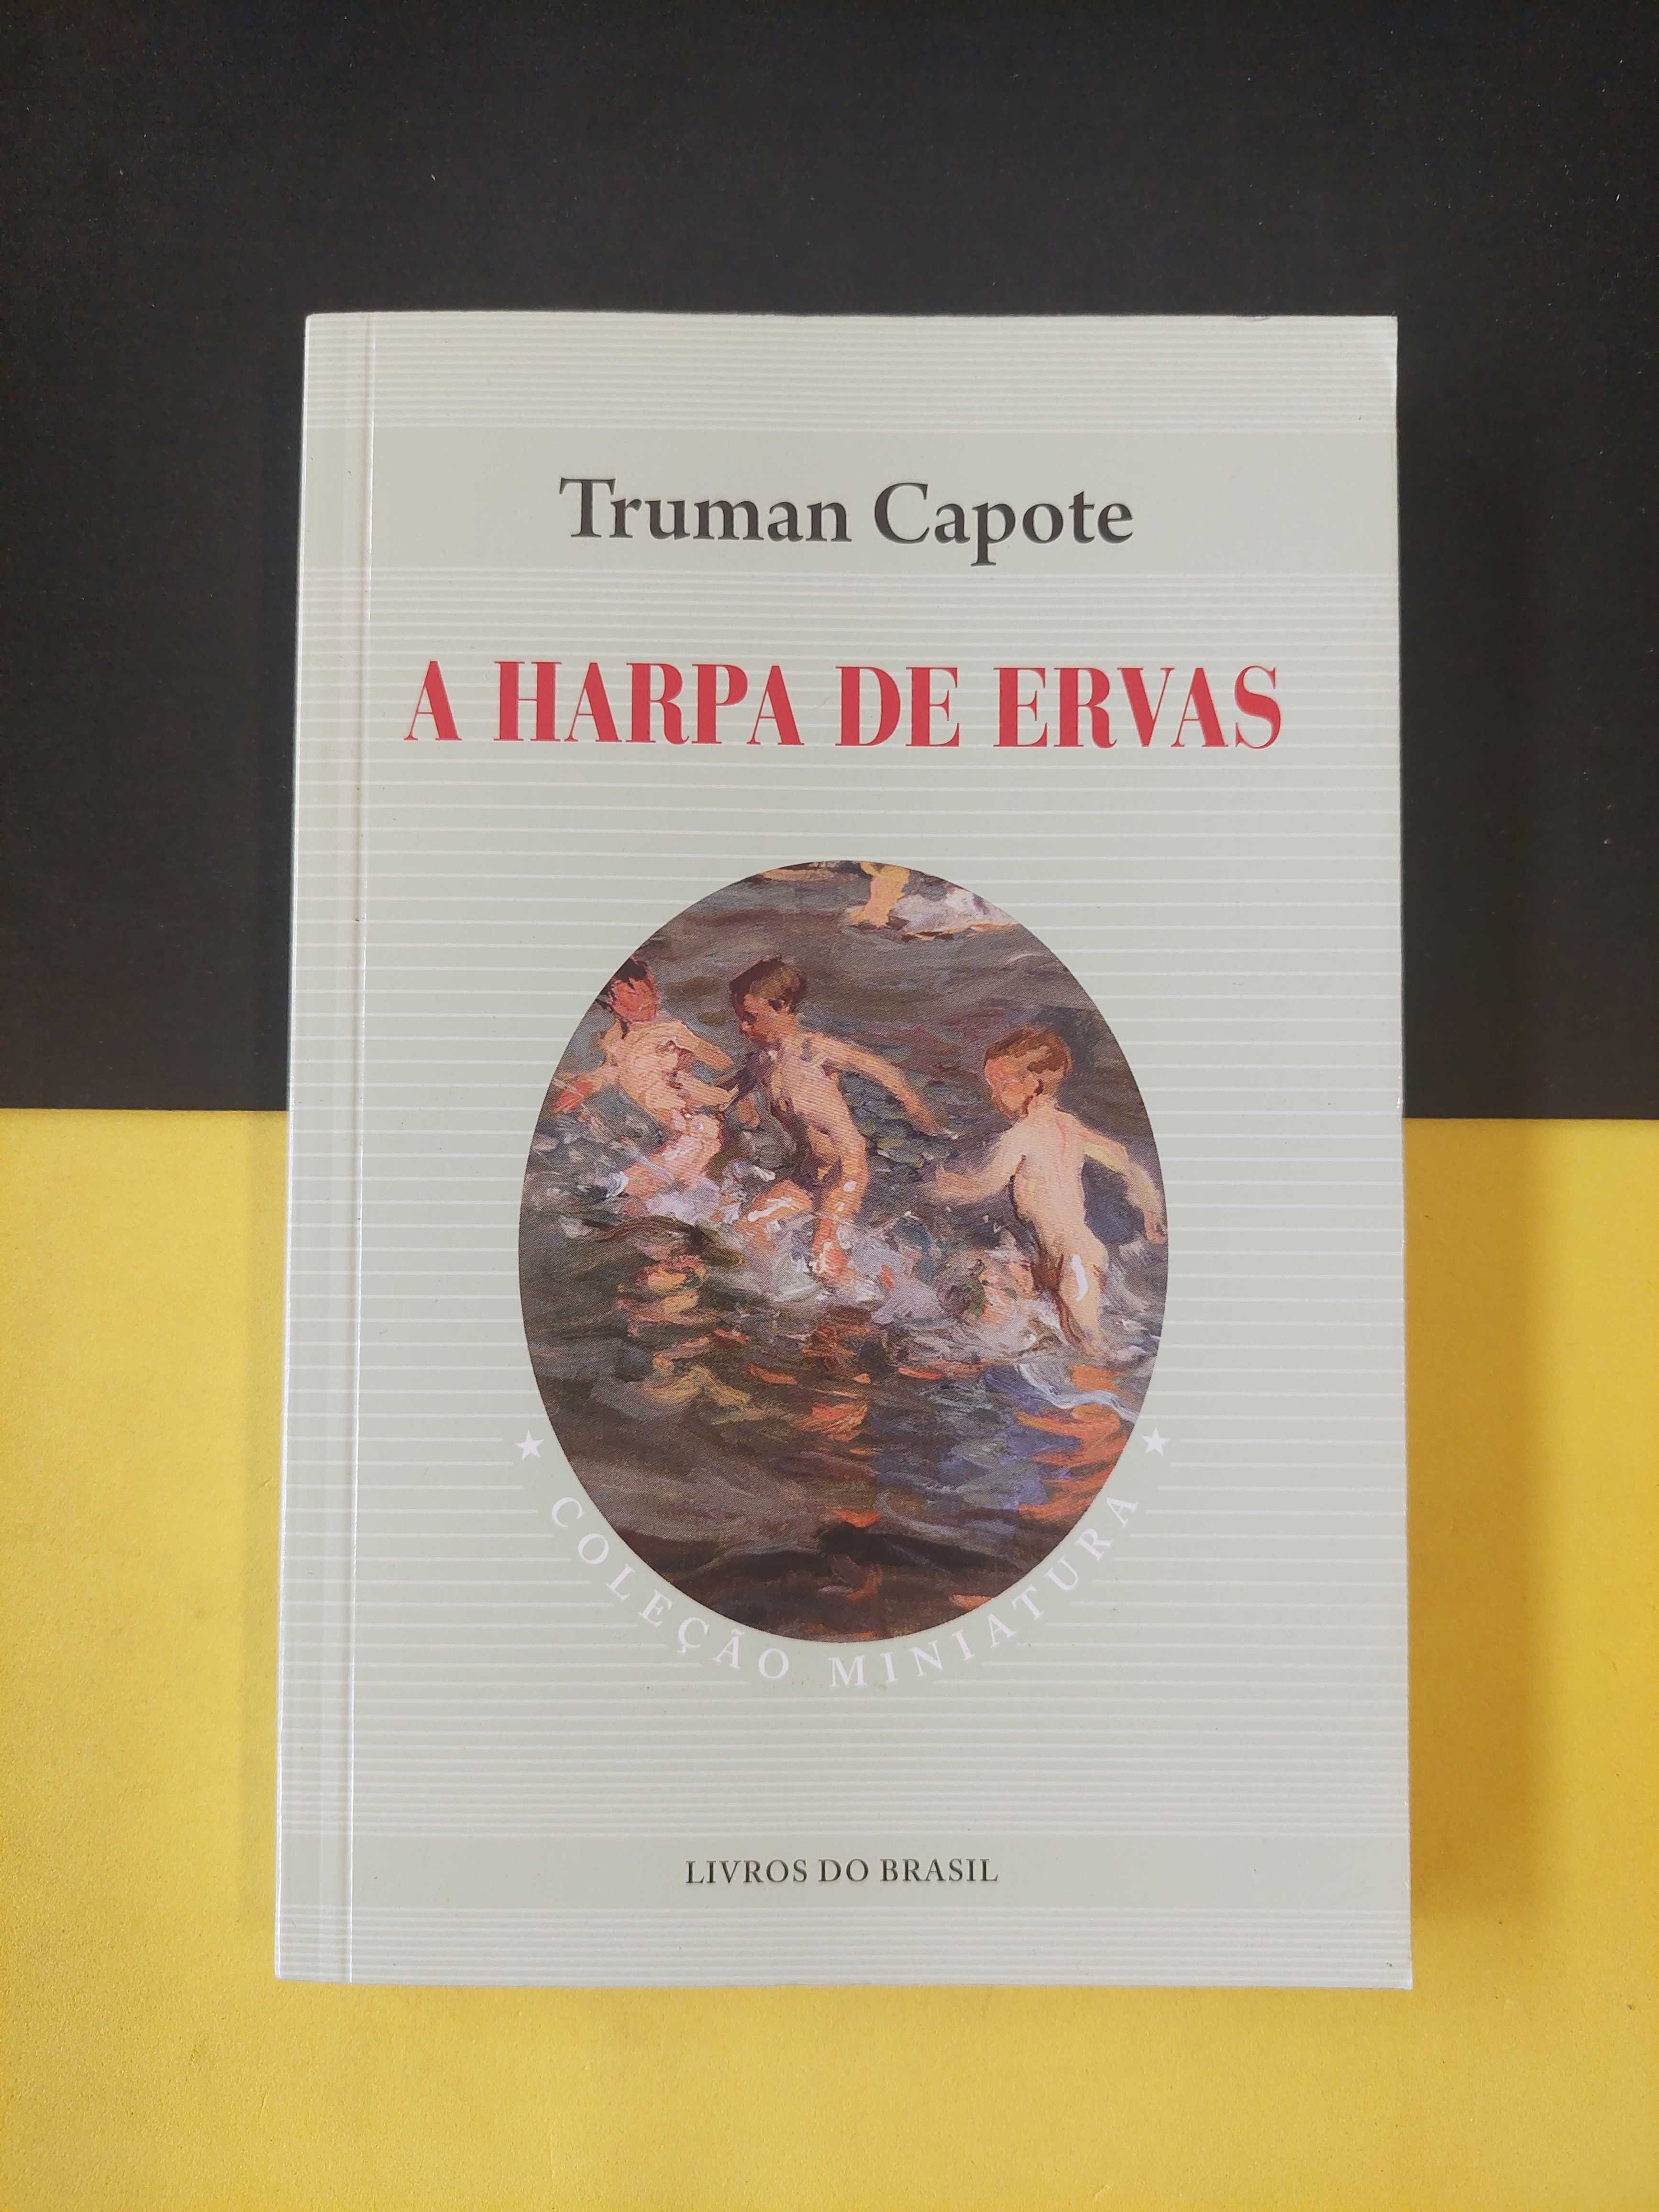 Truman Capote - A harpa de ervas